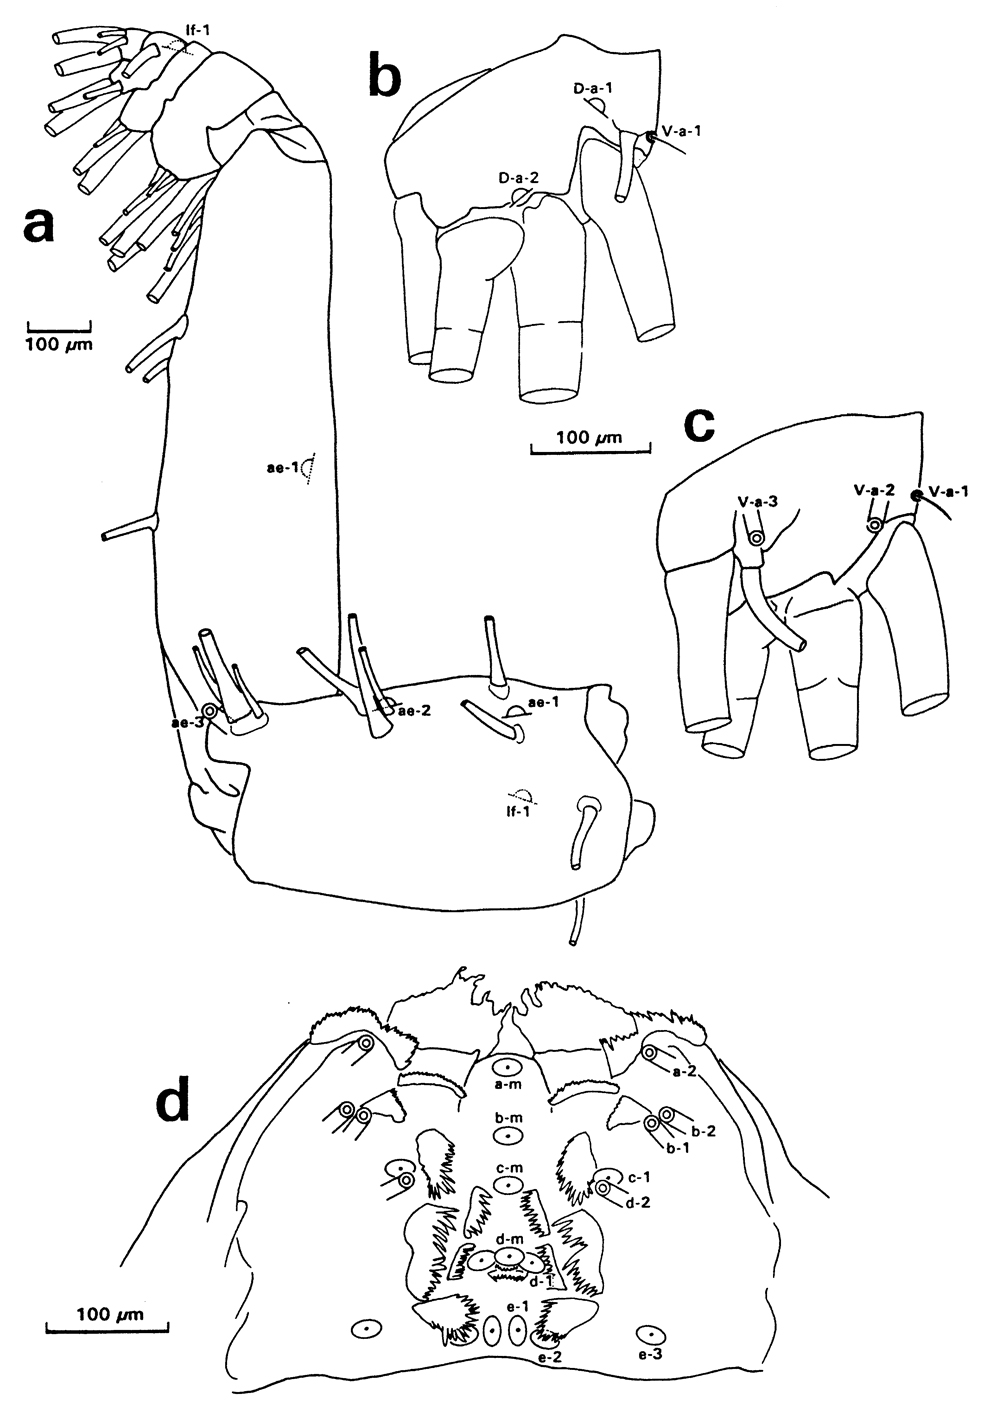 Species Undeuchaeta incisa - Plate 25 of morphological figures